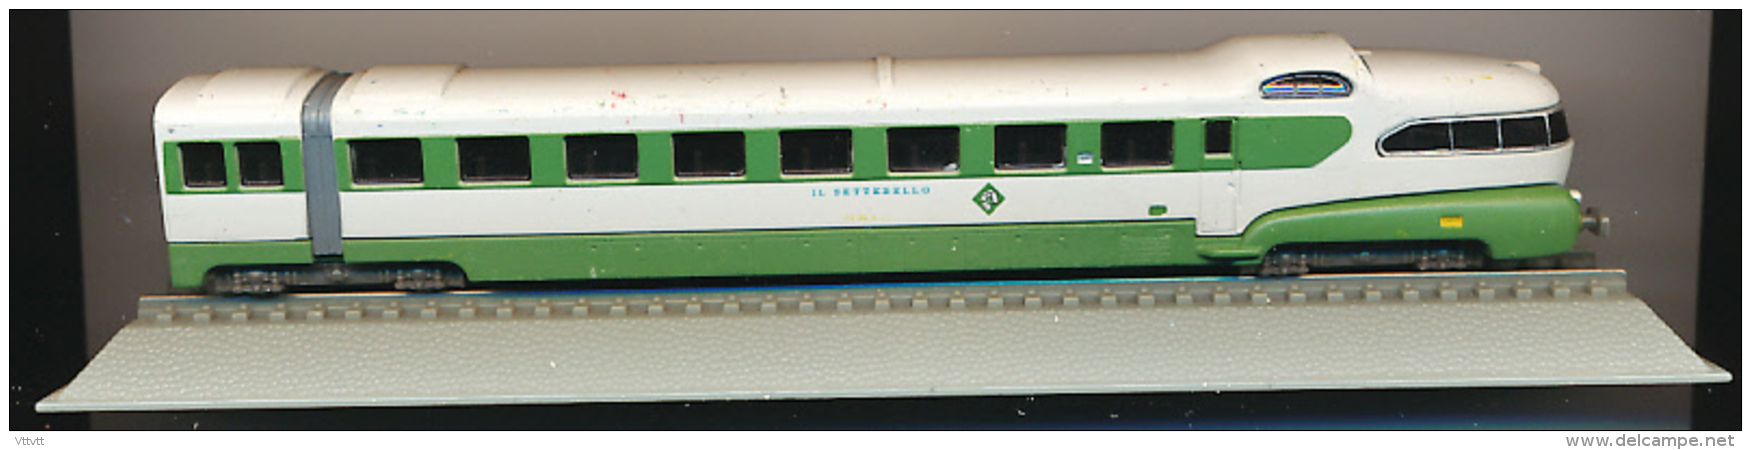 Locomotive : ETR 300 "Settebello", Echelle N 1/160, G = 9 Mm, Italy, Italie - Locomotives